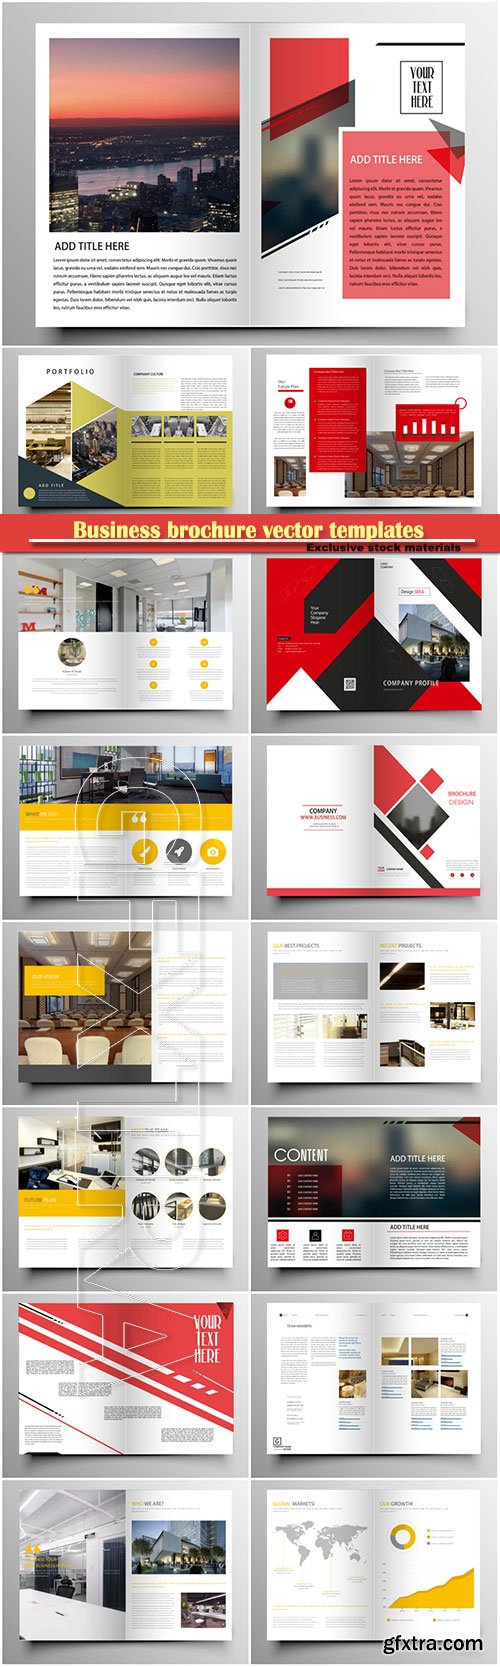 Business brochure vector templates, magazine cover, business mockup, education, presentation, report # 67